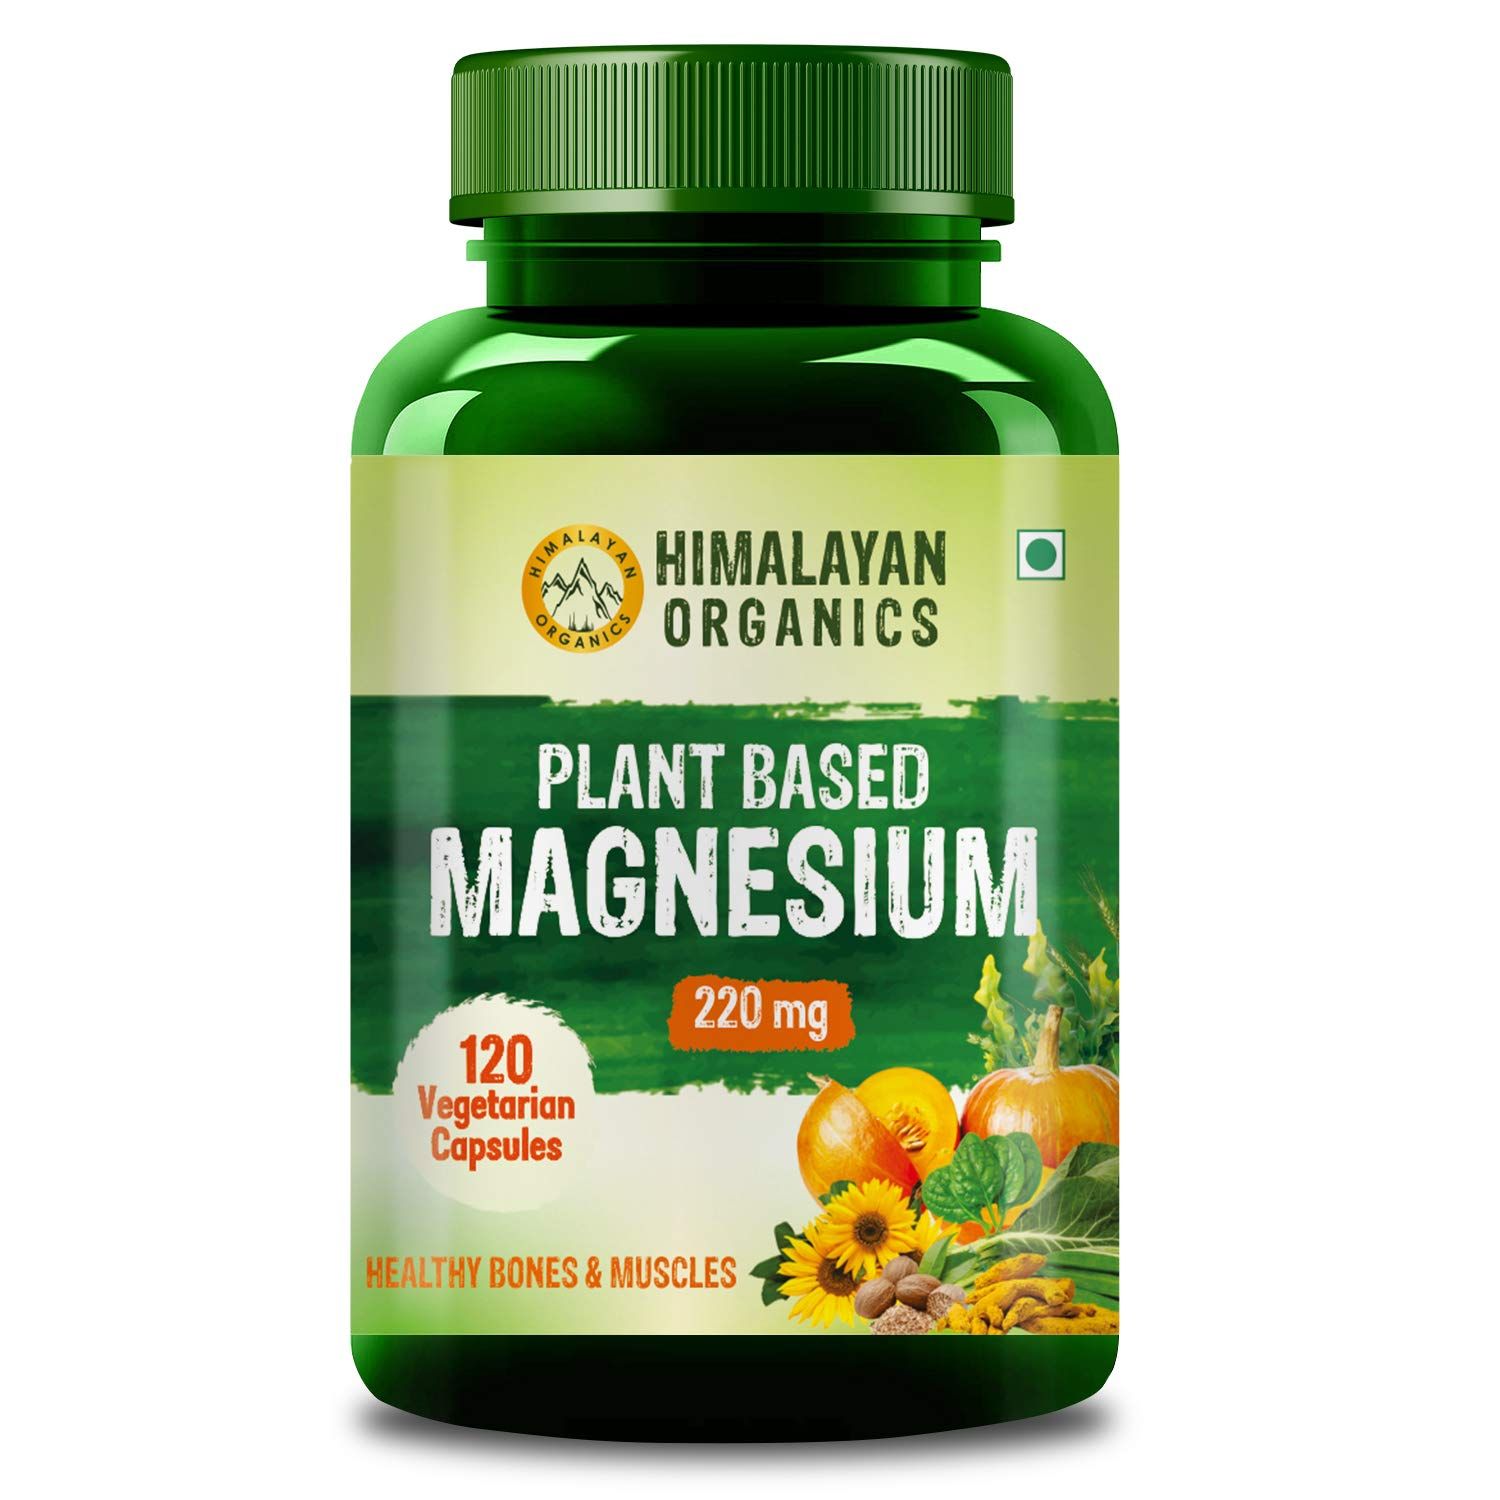 Himalayan Organics Plant Based Magnesium Image